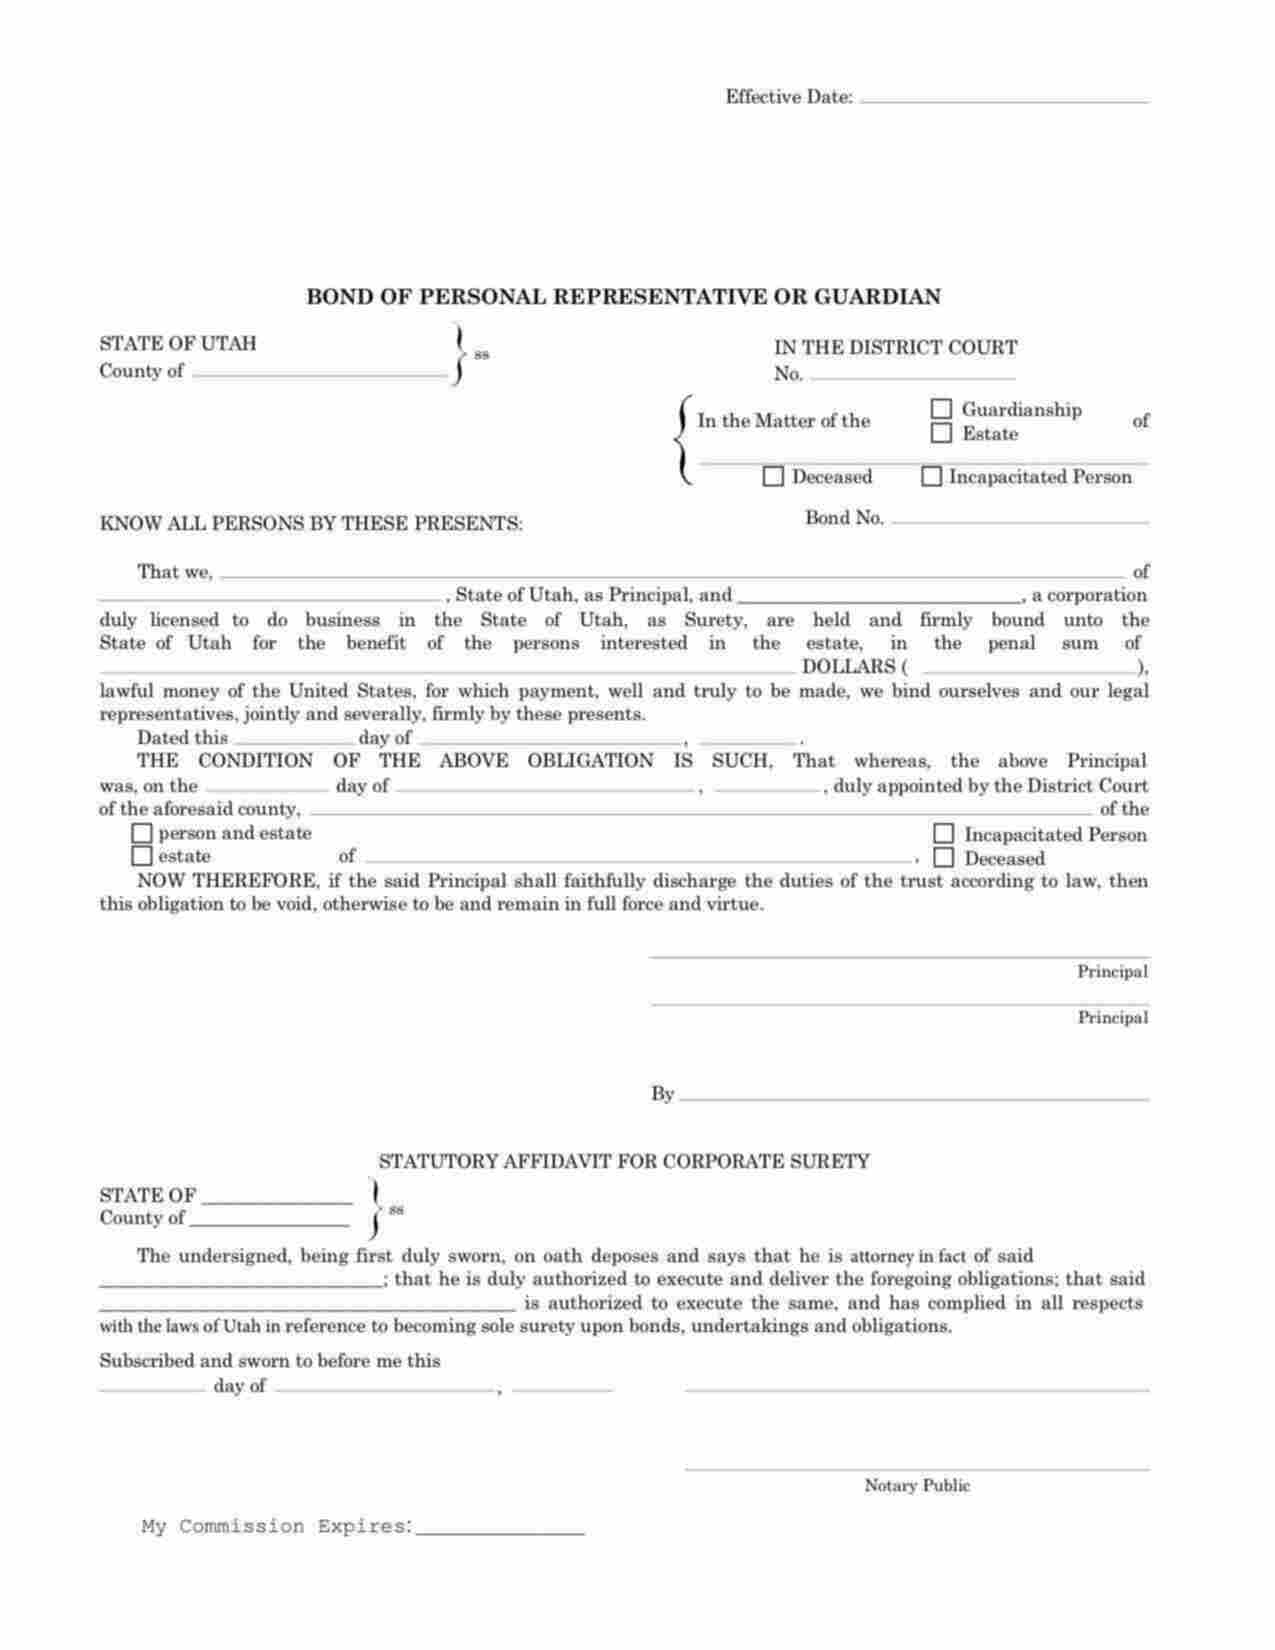 Utah Probate Administrator, Executor, Conservator, or Guardian Bond Form